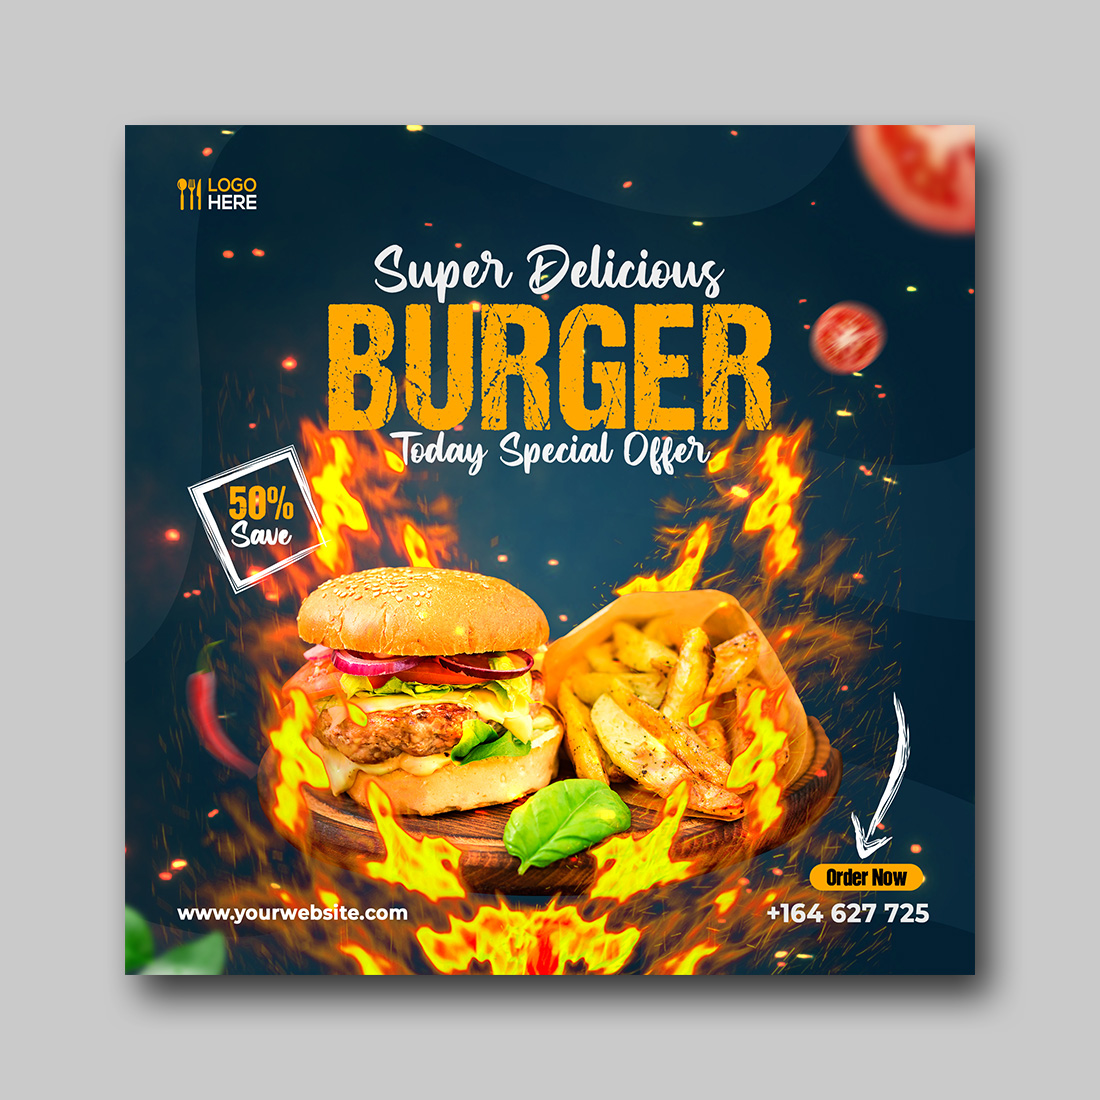 Burger Social Media Design Template cover image.